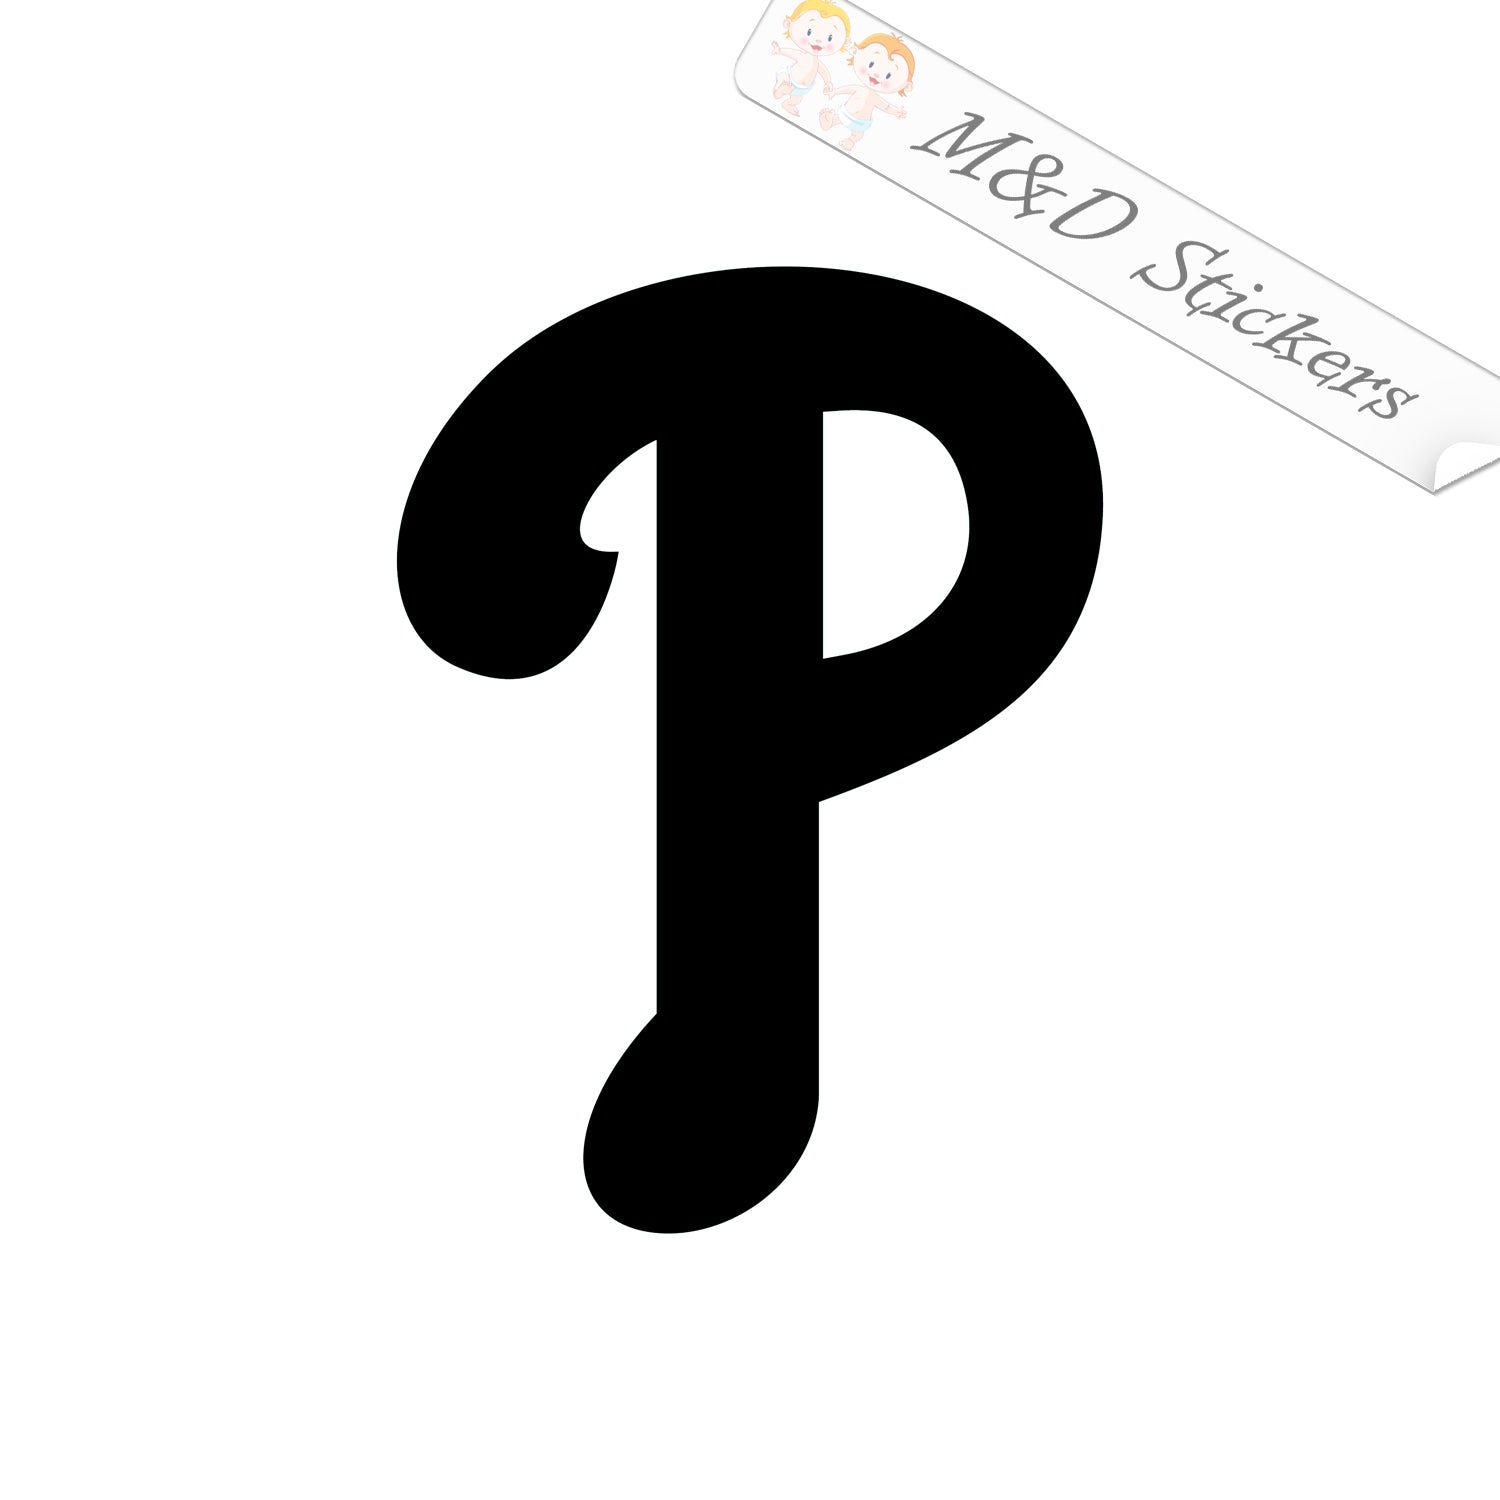 phillies logo black and white